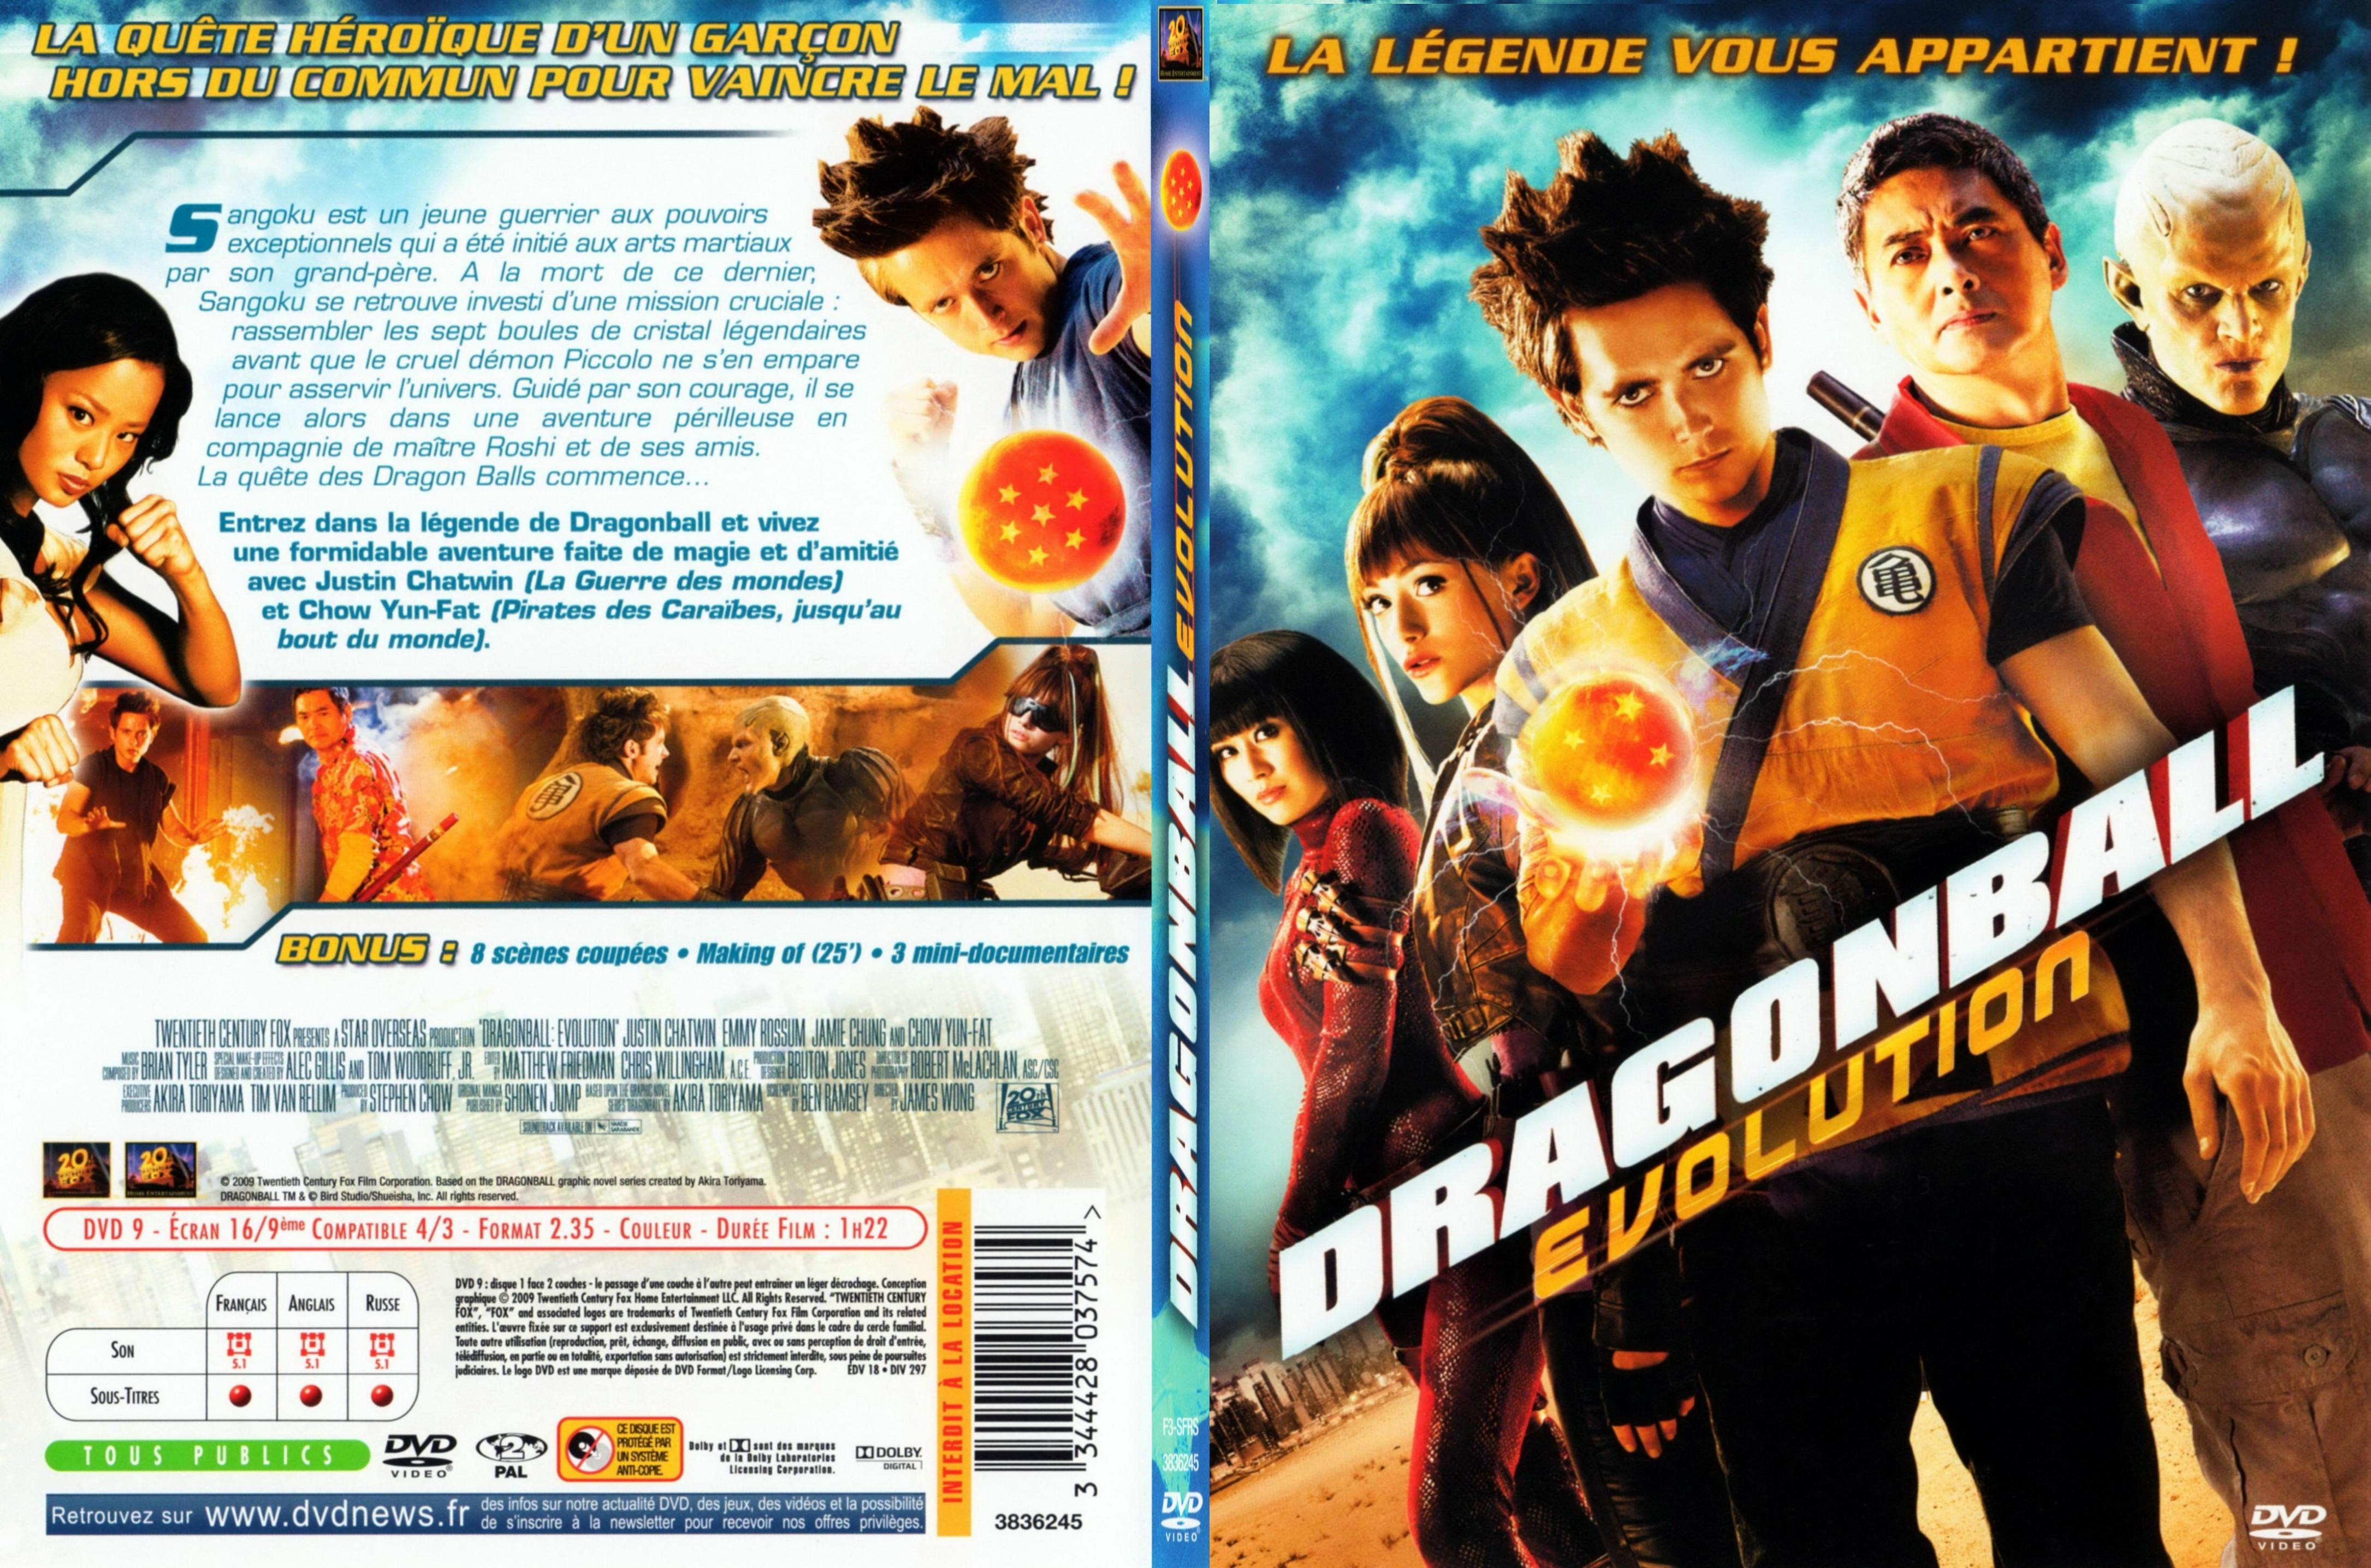 Jaquette DVD Dragonball evolution - SLIM